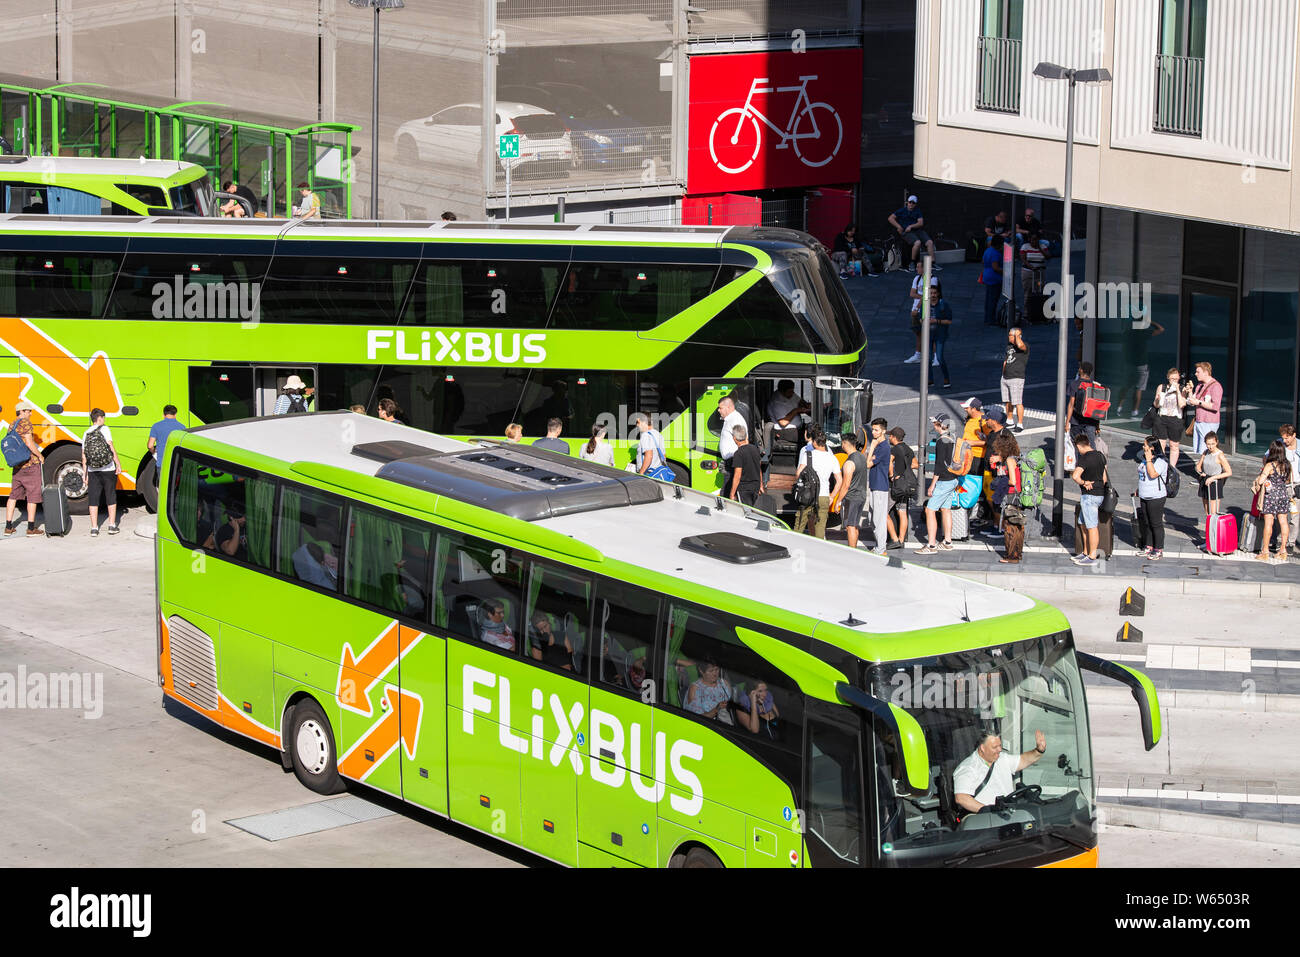 flixbus at frankfurt airport